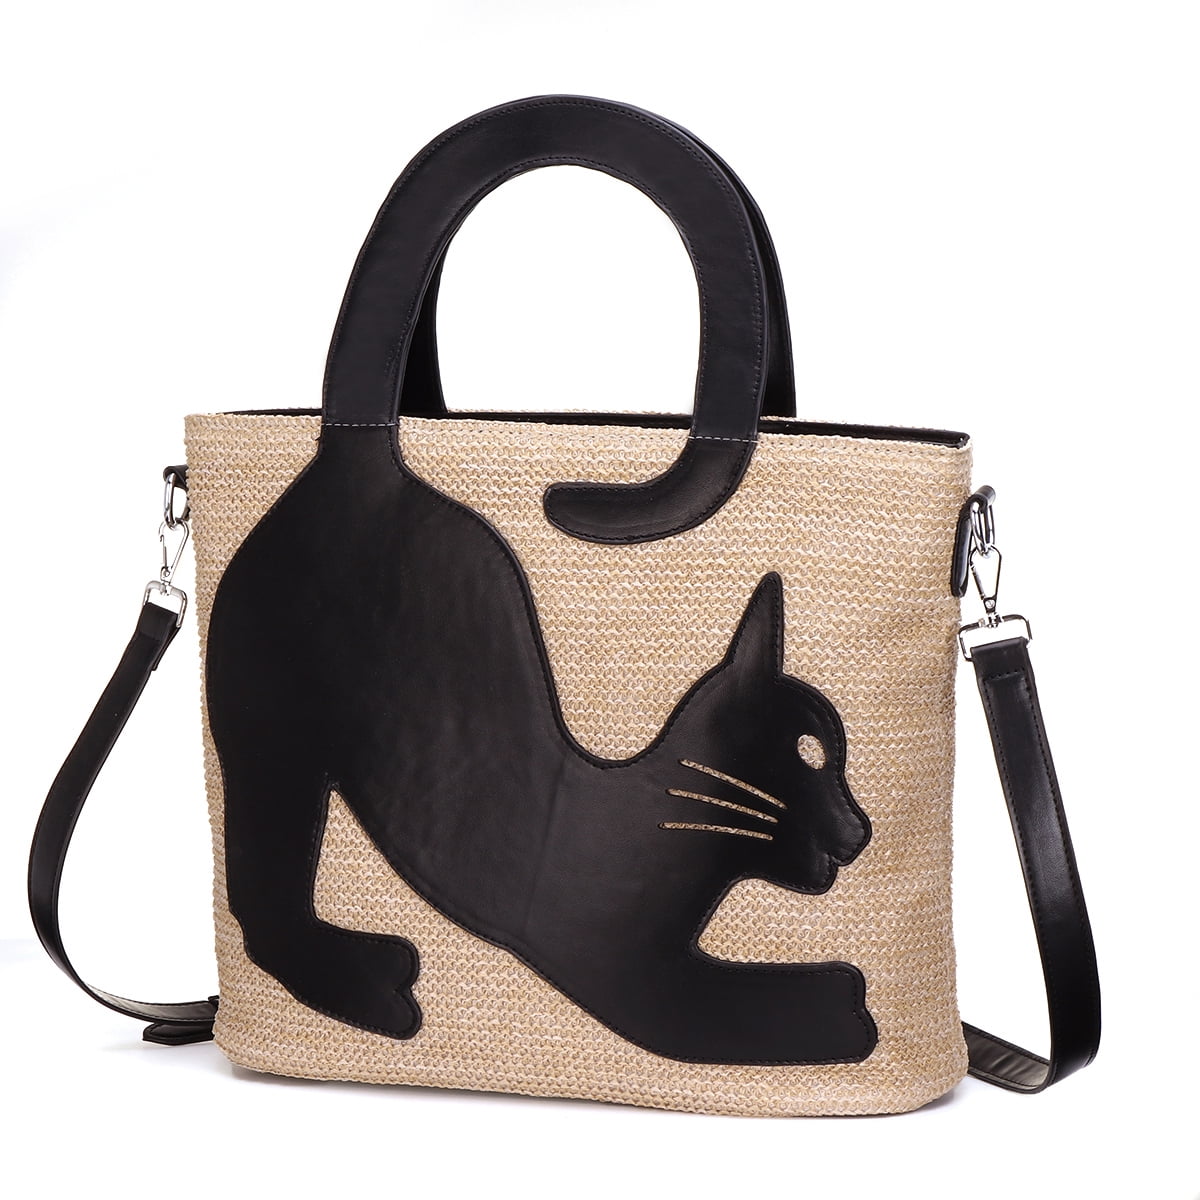 Sunlome Cool Black Cat White Handbags For Women Girls PU Leather Shoulder Tote Bag